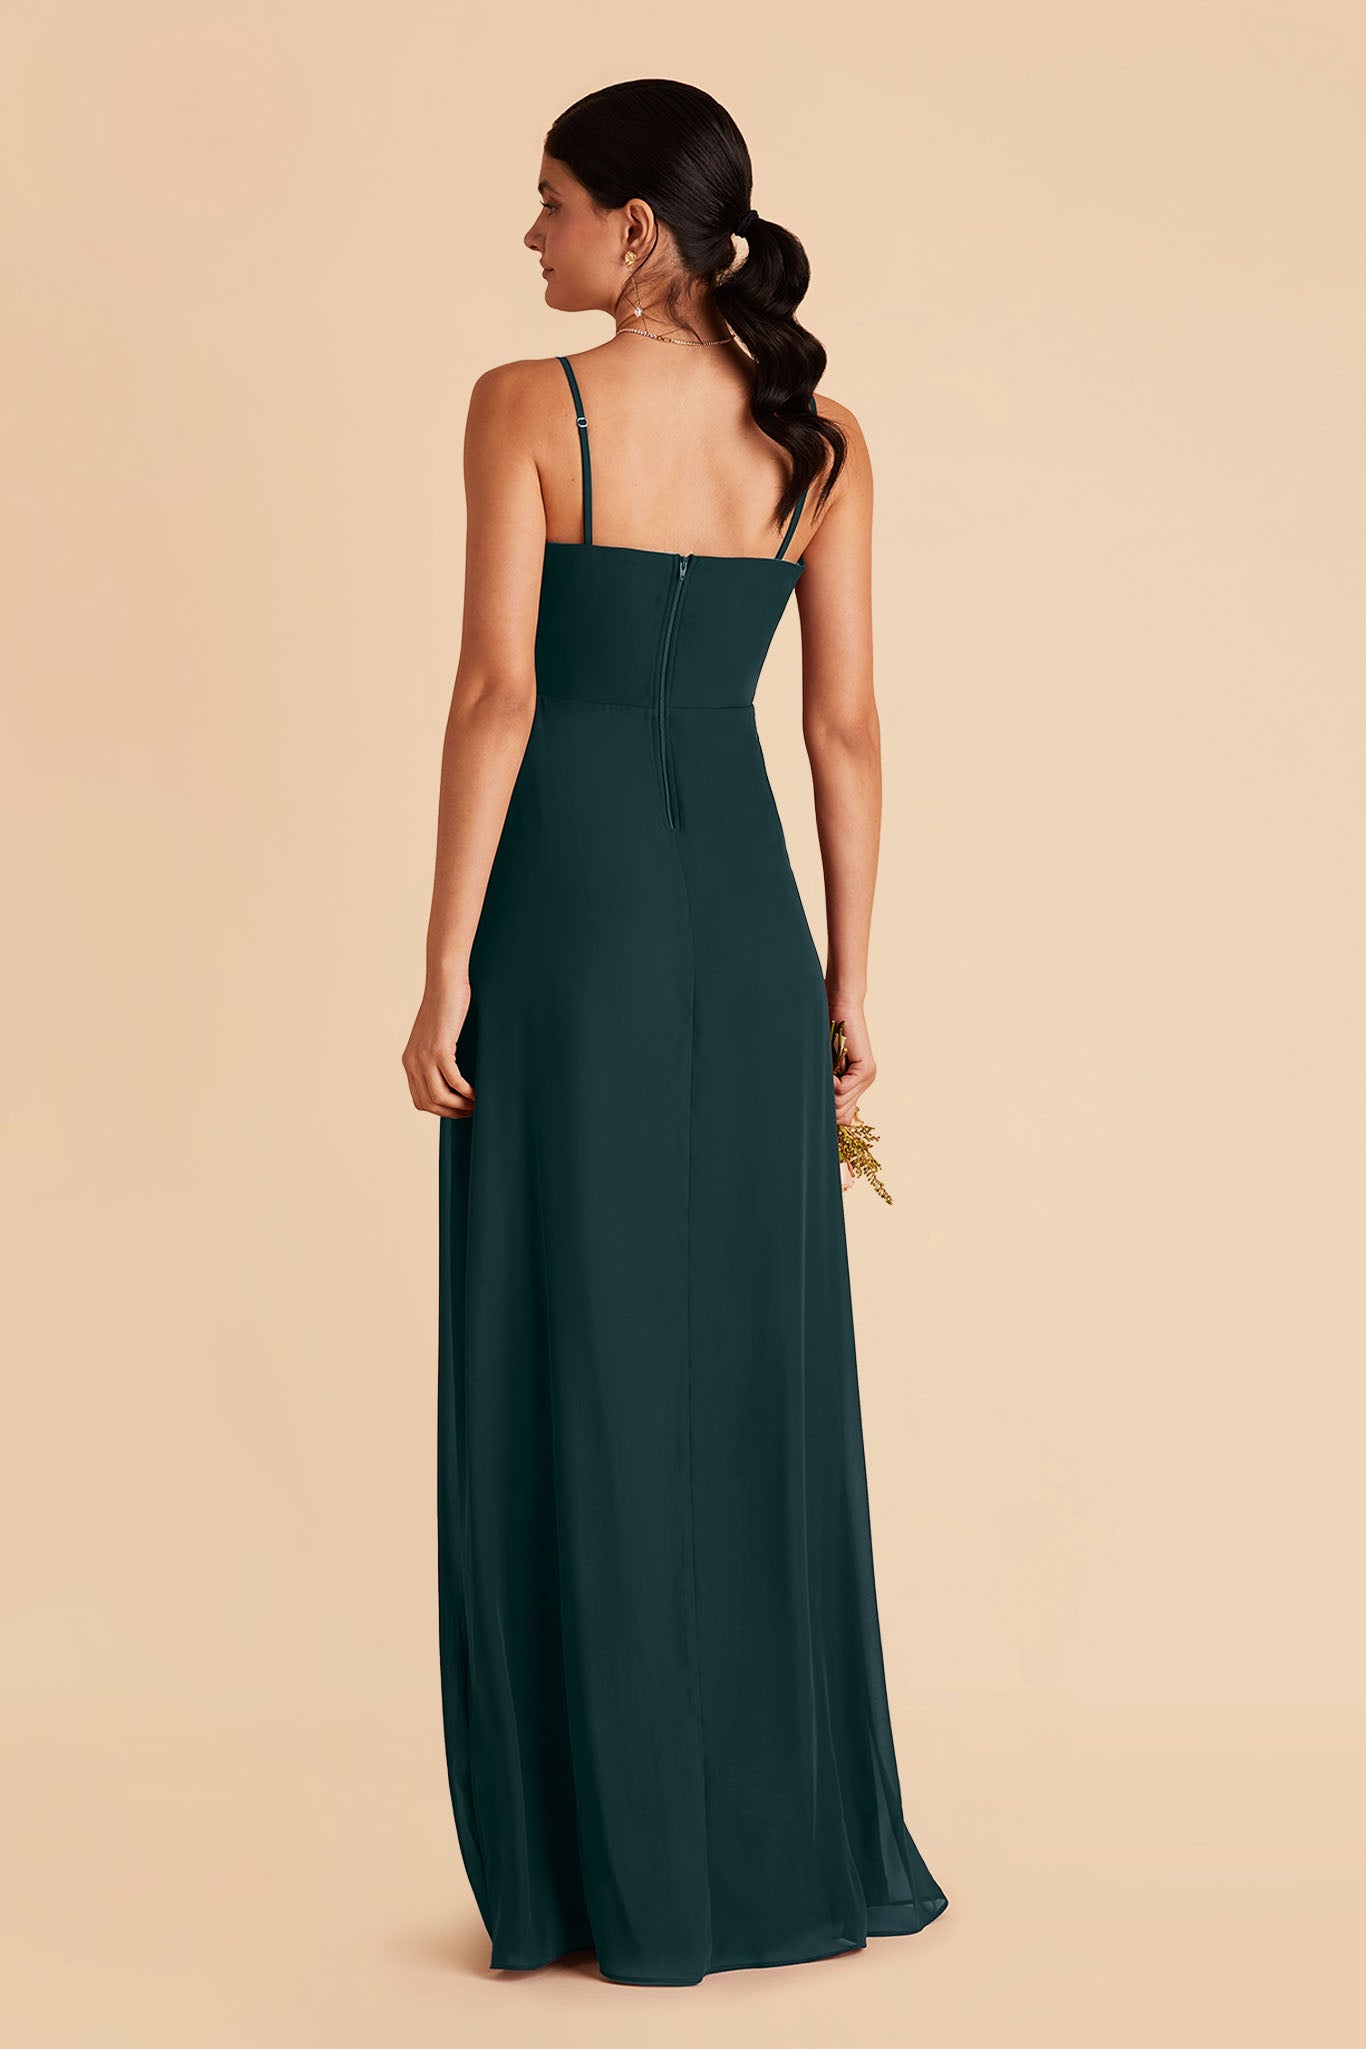 Emerald Chris Convertible Chiffon Dress by Birdy Grey